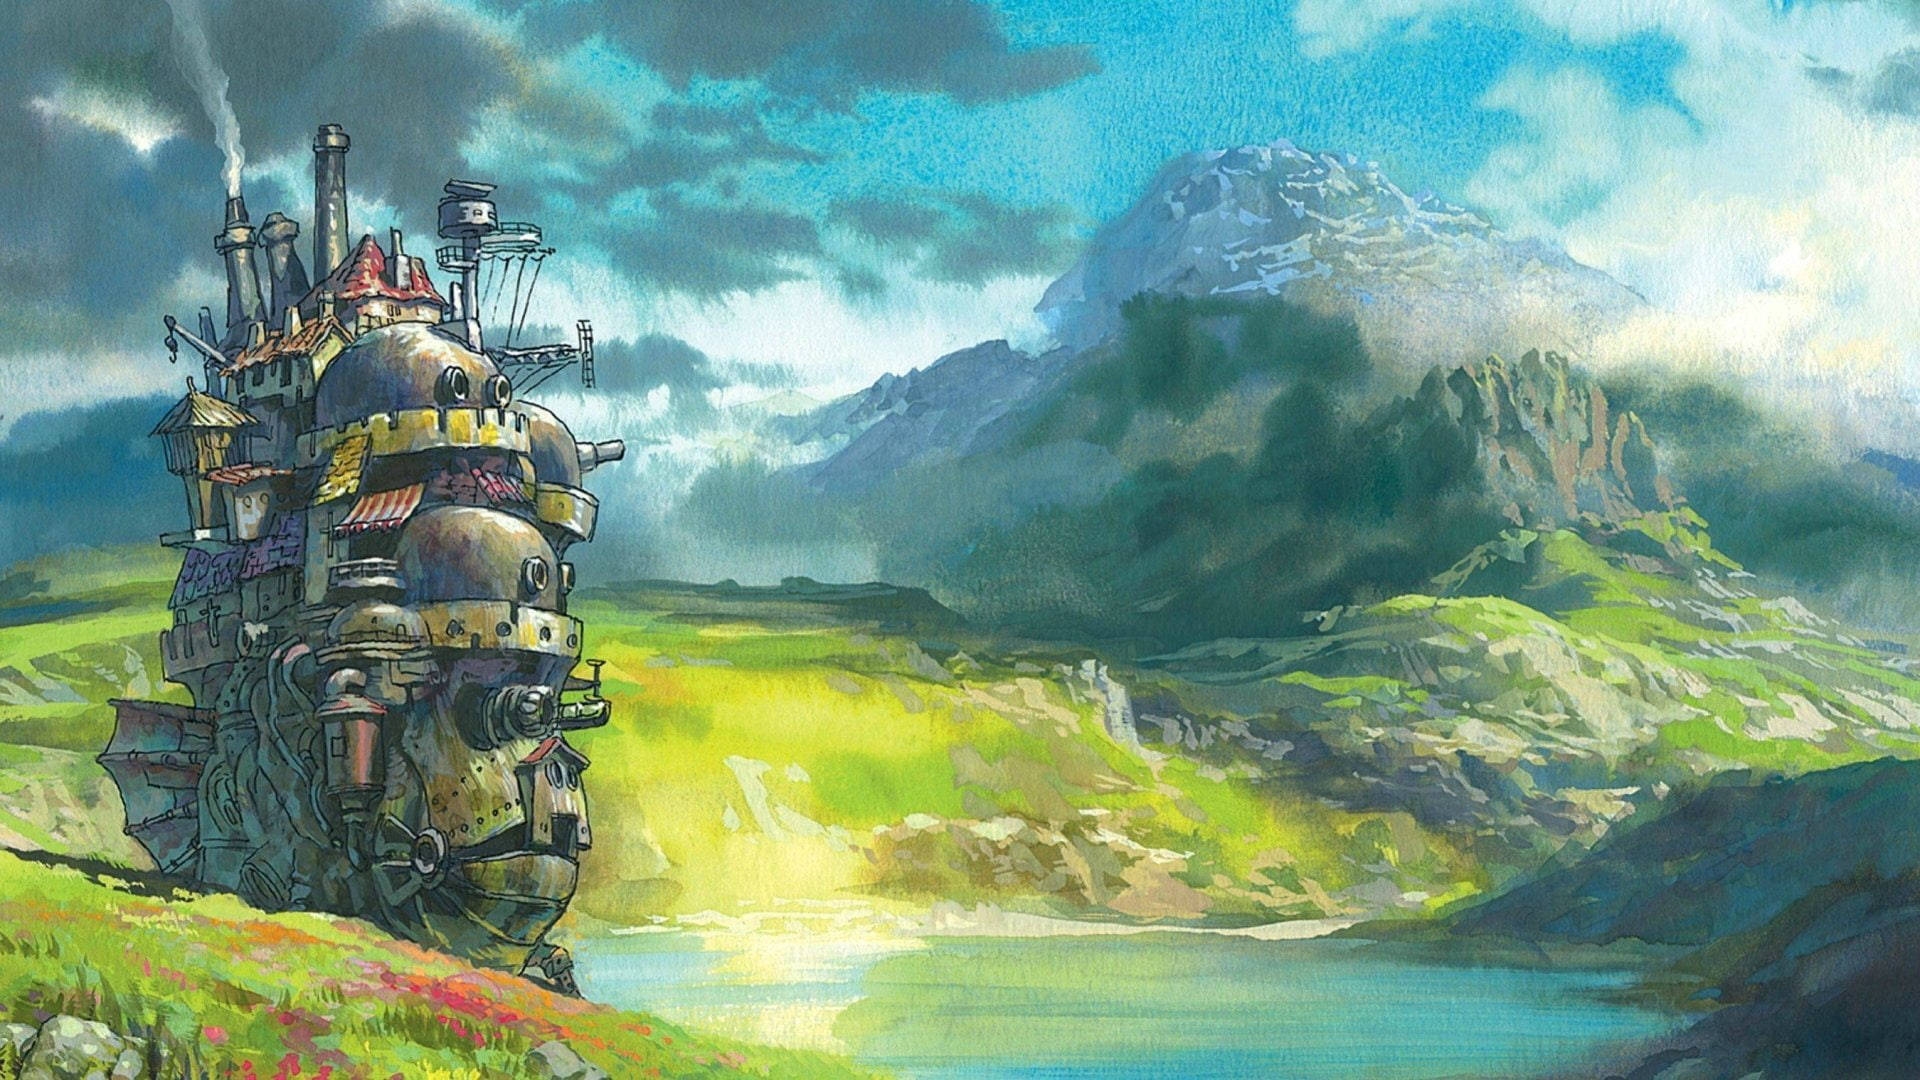 Studio Ghibli Scenery Howl’s Moving Castle